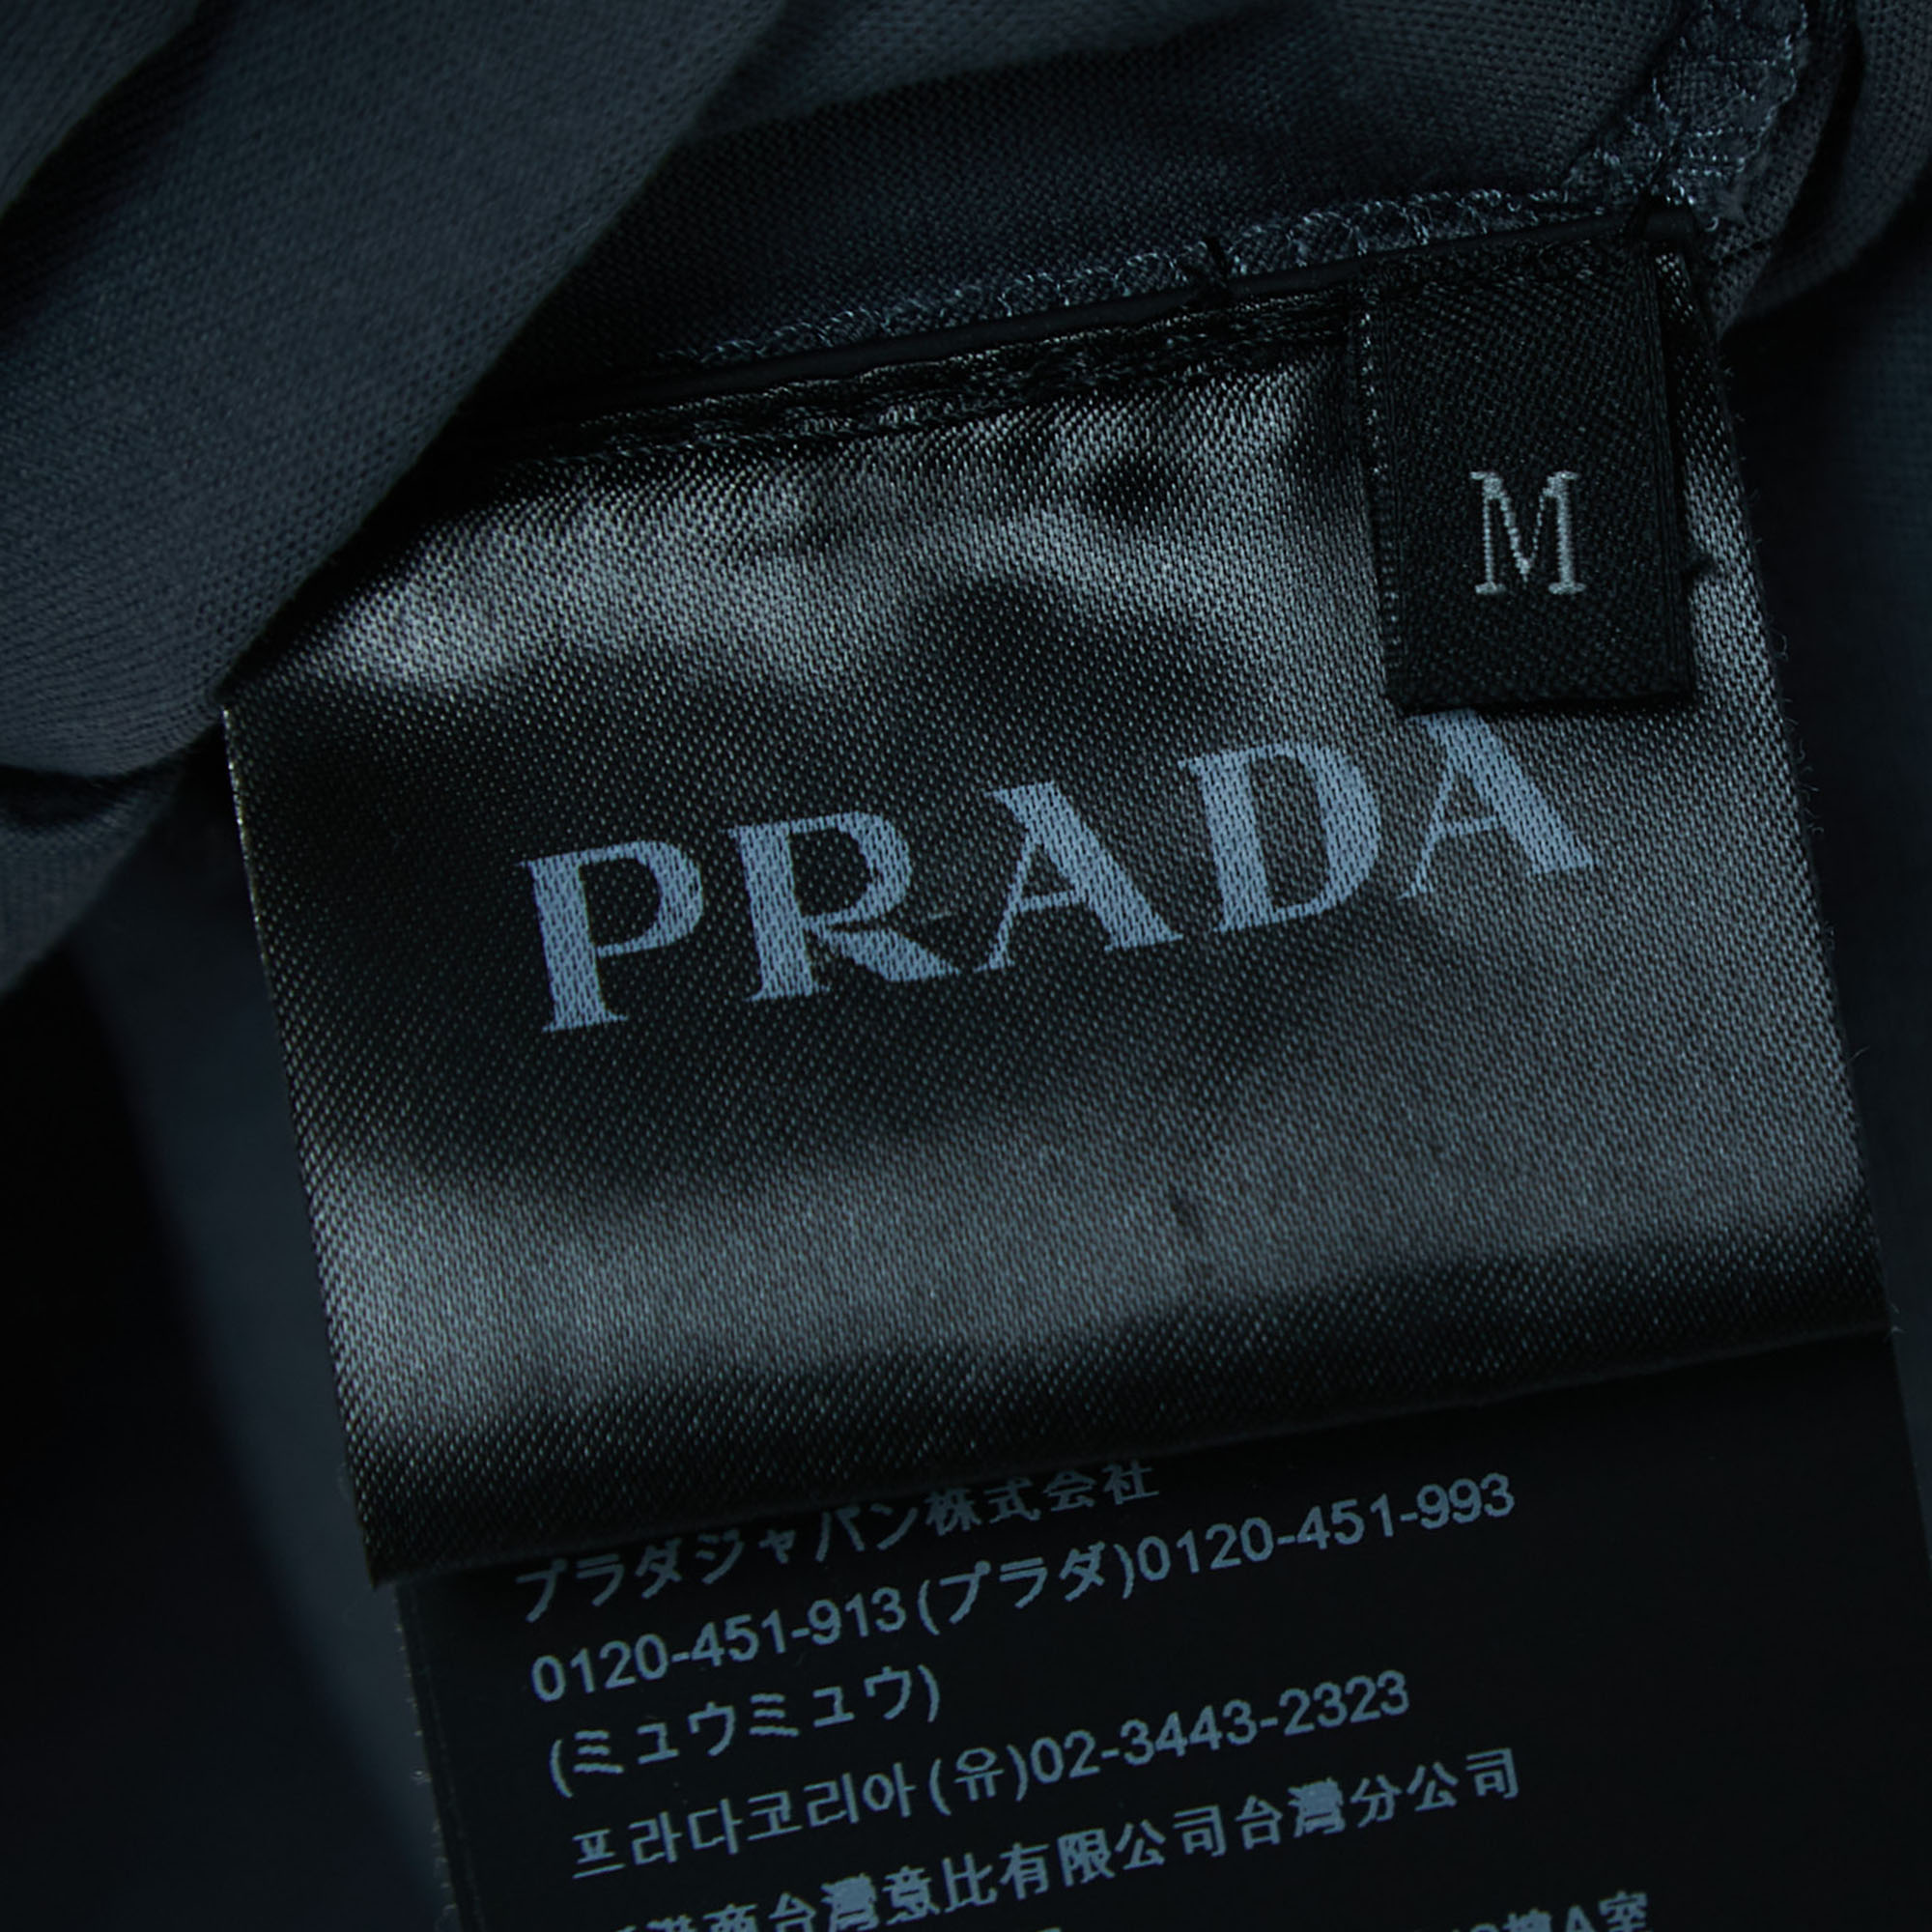 Prada Grey Cotton Logo Pocket Detailed Polo T-Shirt M